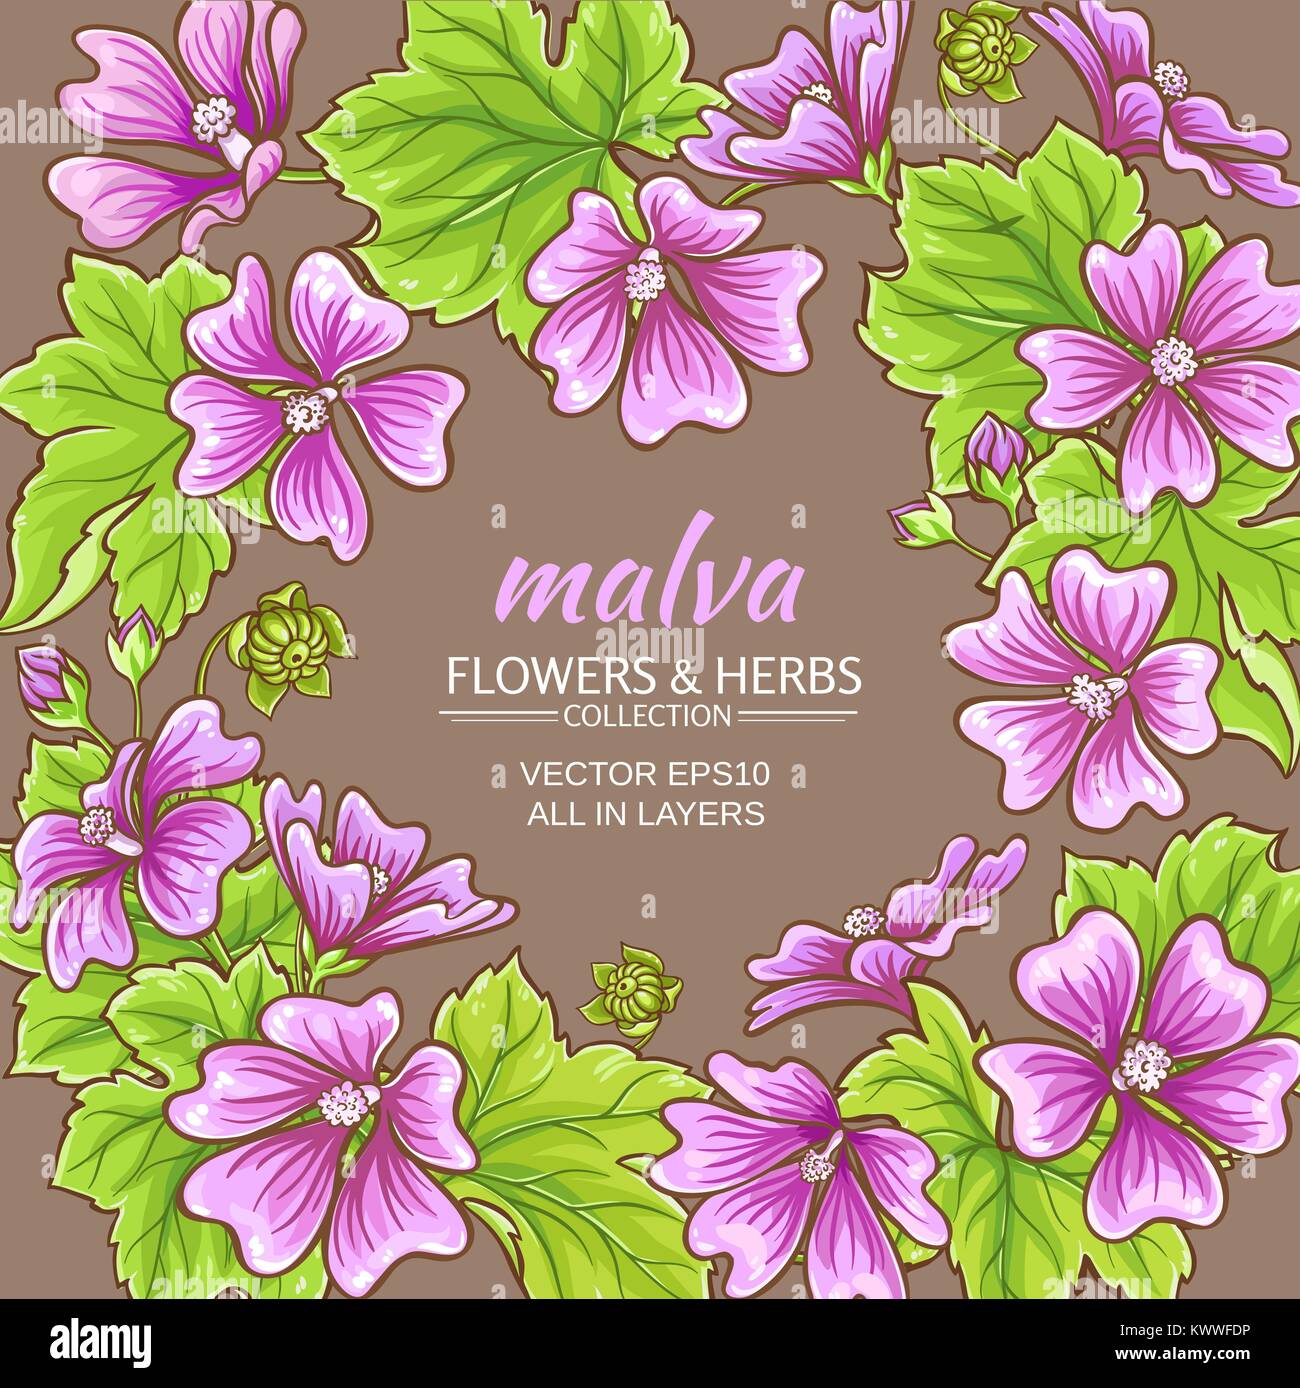 malva flowers vector frame on color background Stock Vector